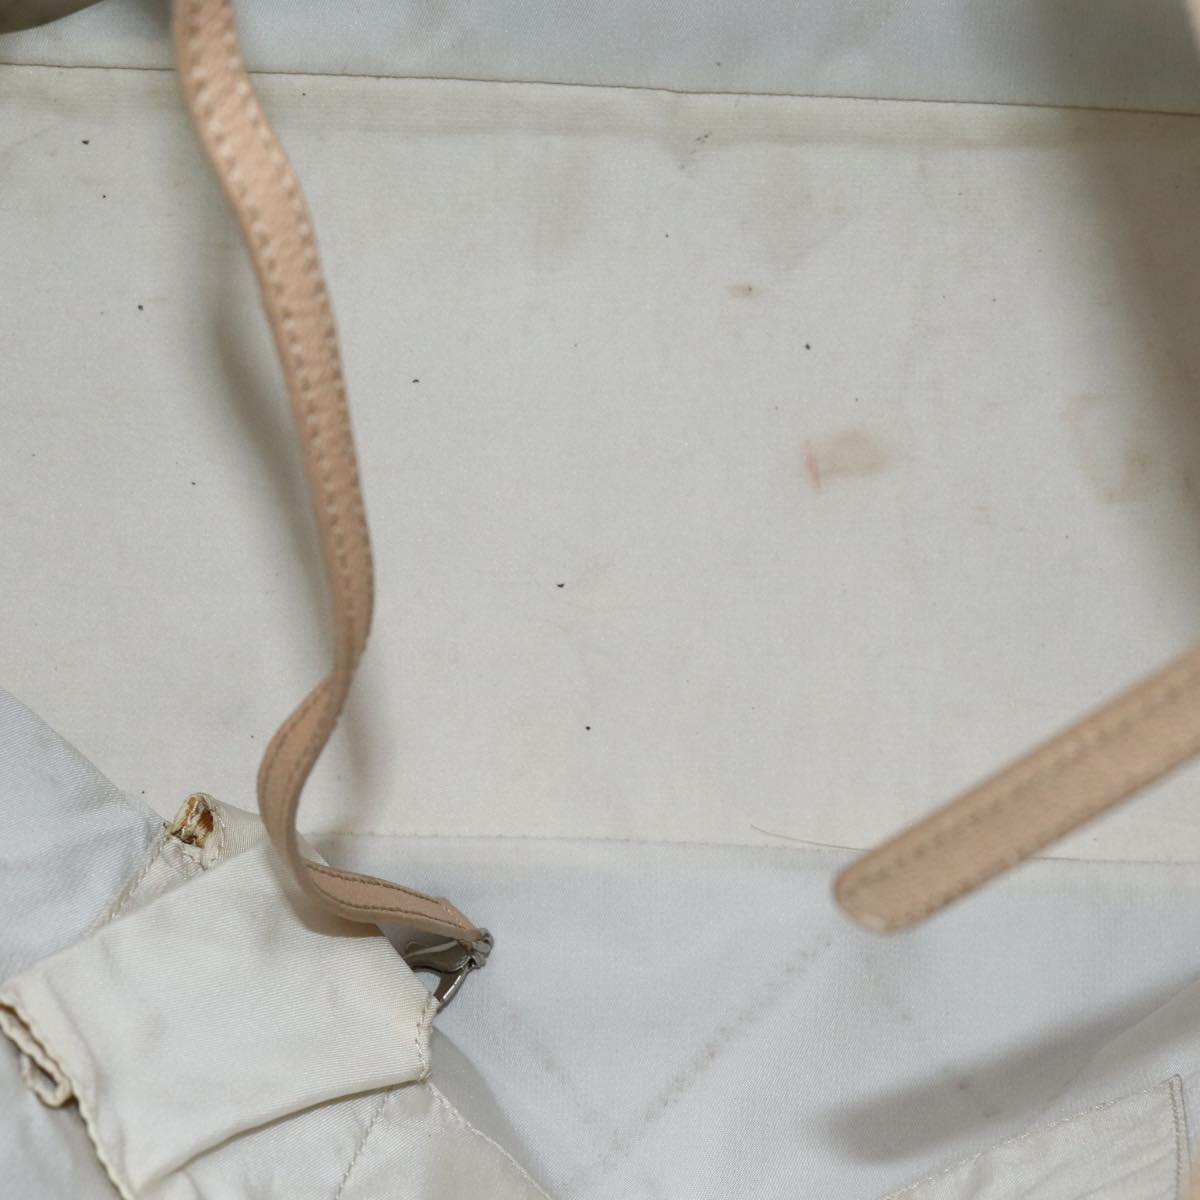 CHANEL Wild Stitch Tote Bag Leather Beige CC Auth 72149